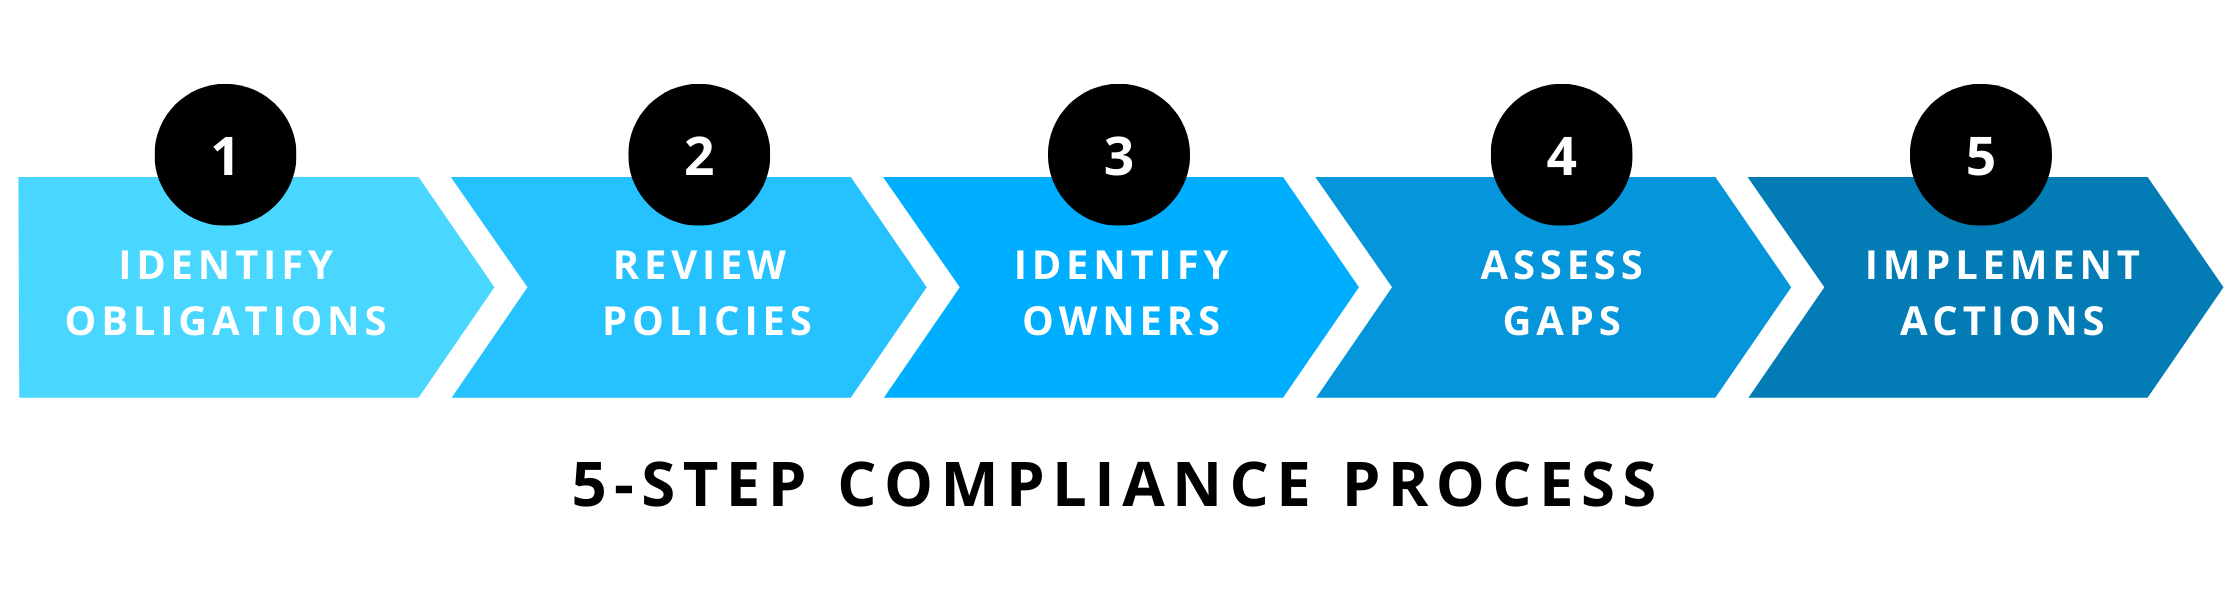 NIS2 list of 5-step compliance process 